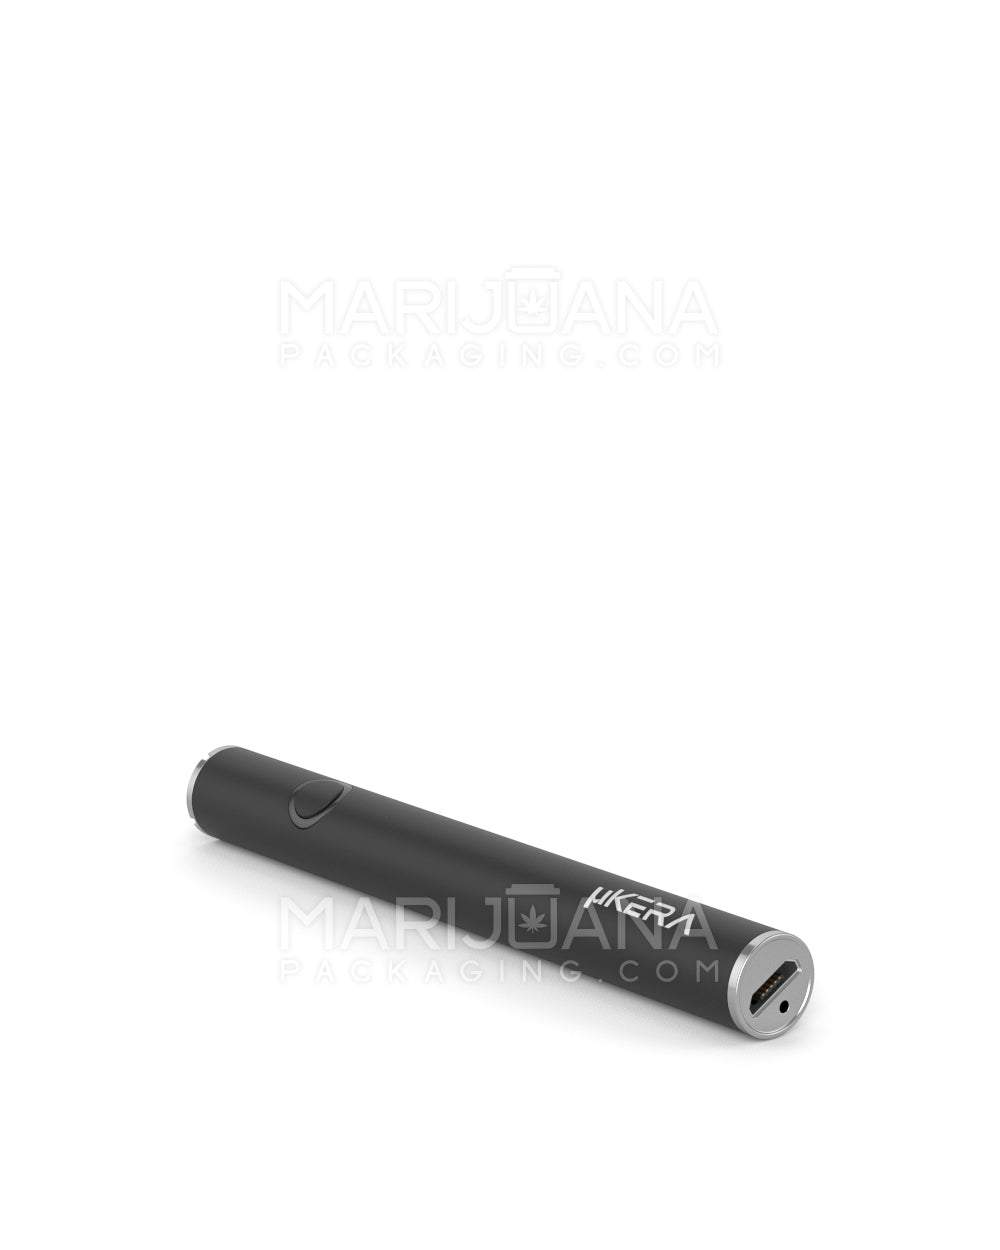 Variable Voltage Soft Touch Vape Battery | 320mAh - Black - 80 Count - 6